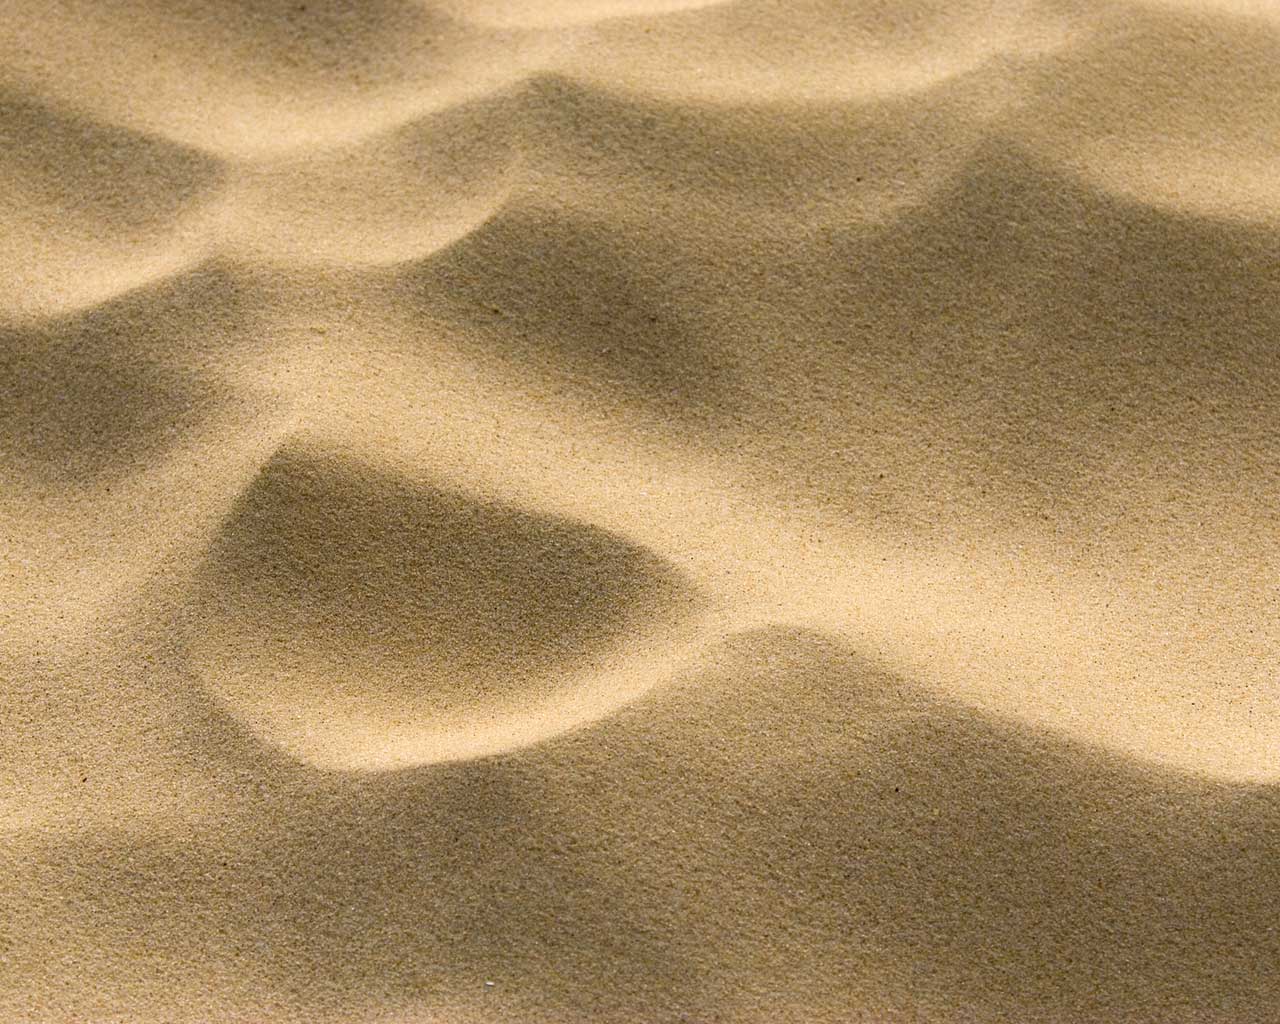 The Virtuosi Grains of Sand